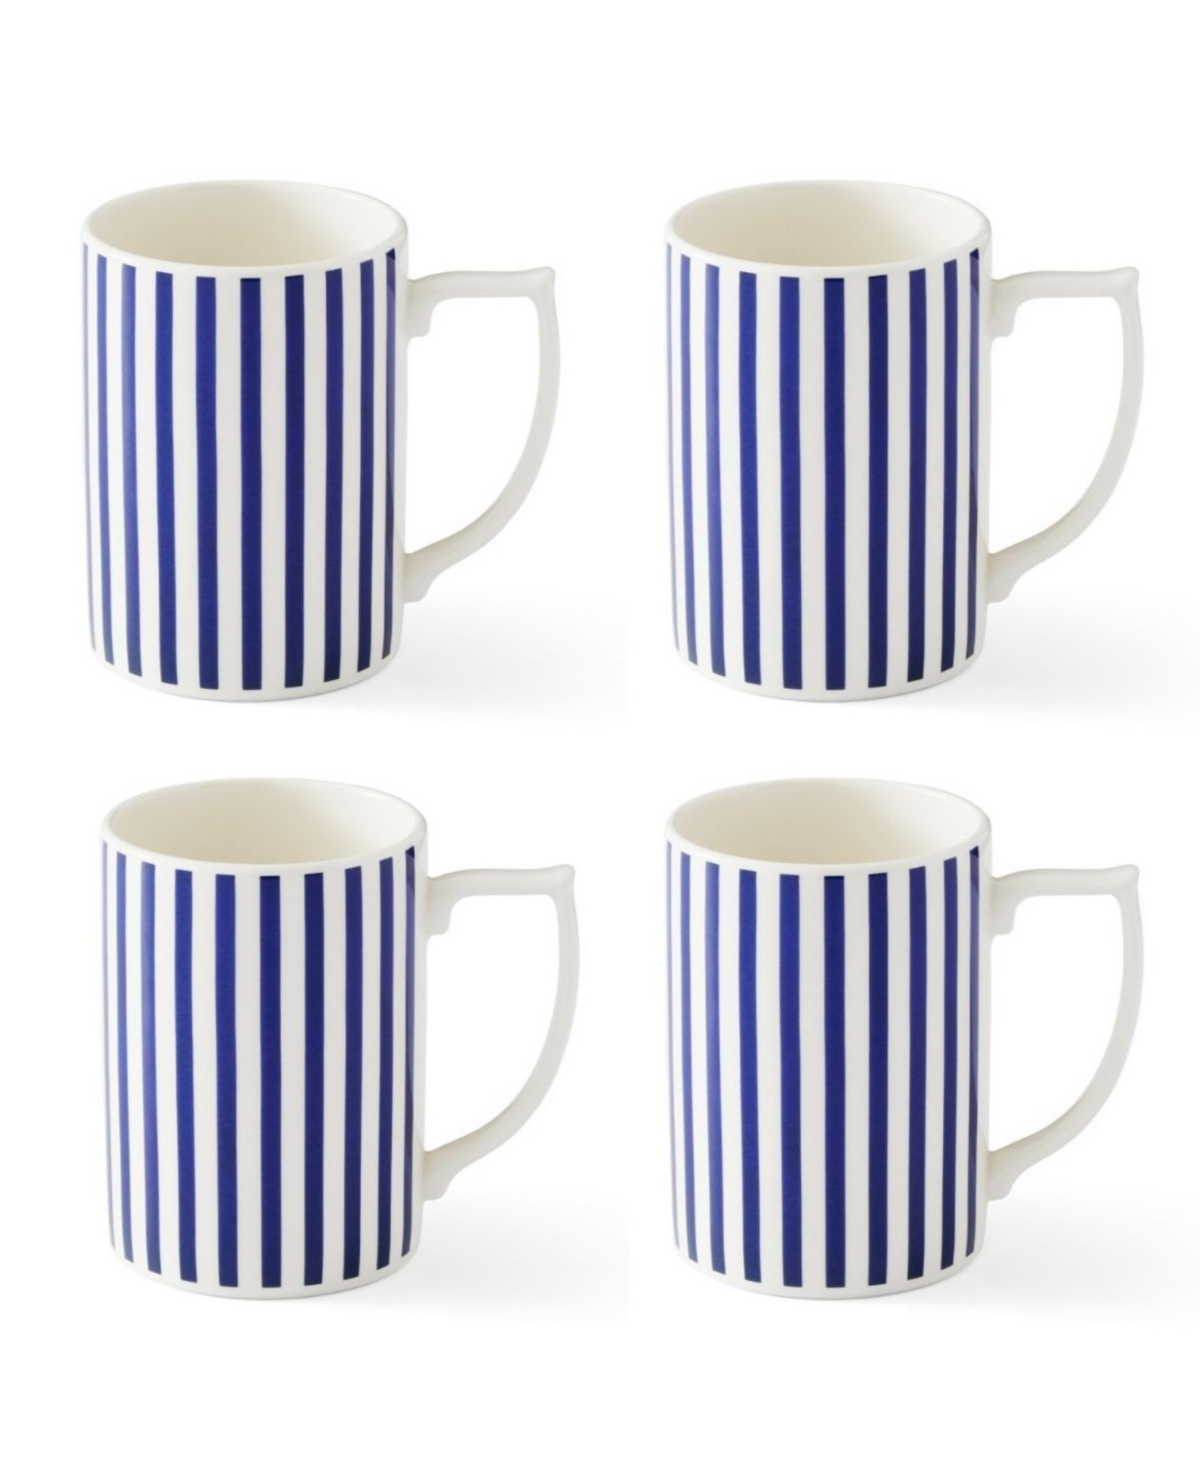 Blue Italian Steccato Narrow Stripe Mugs, Set of 4 - Blue